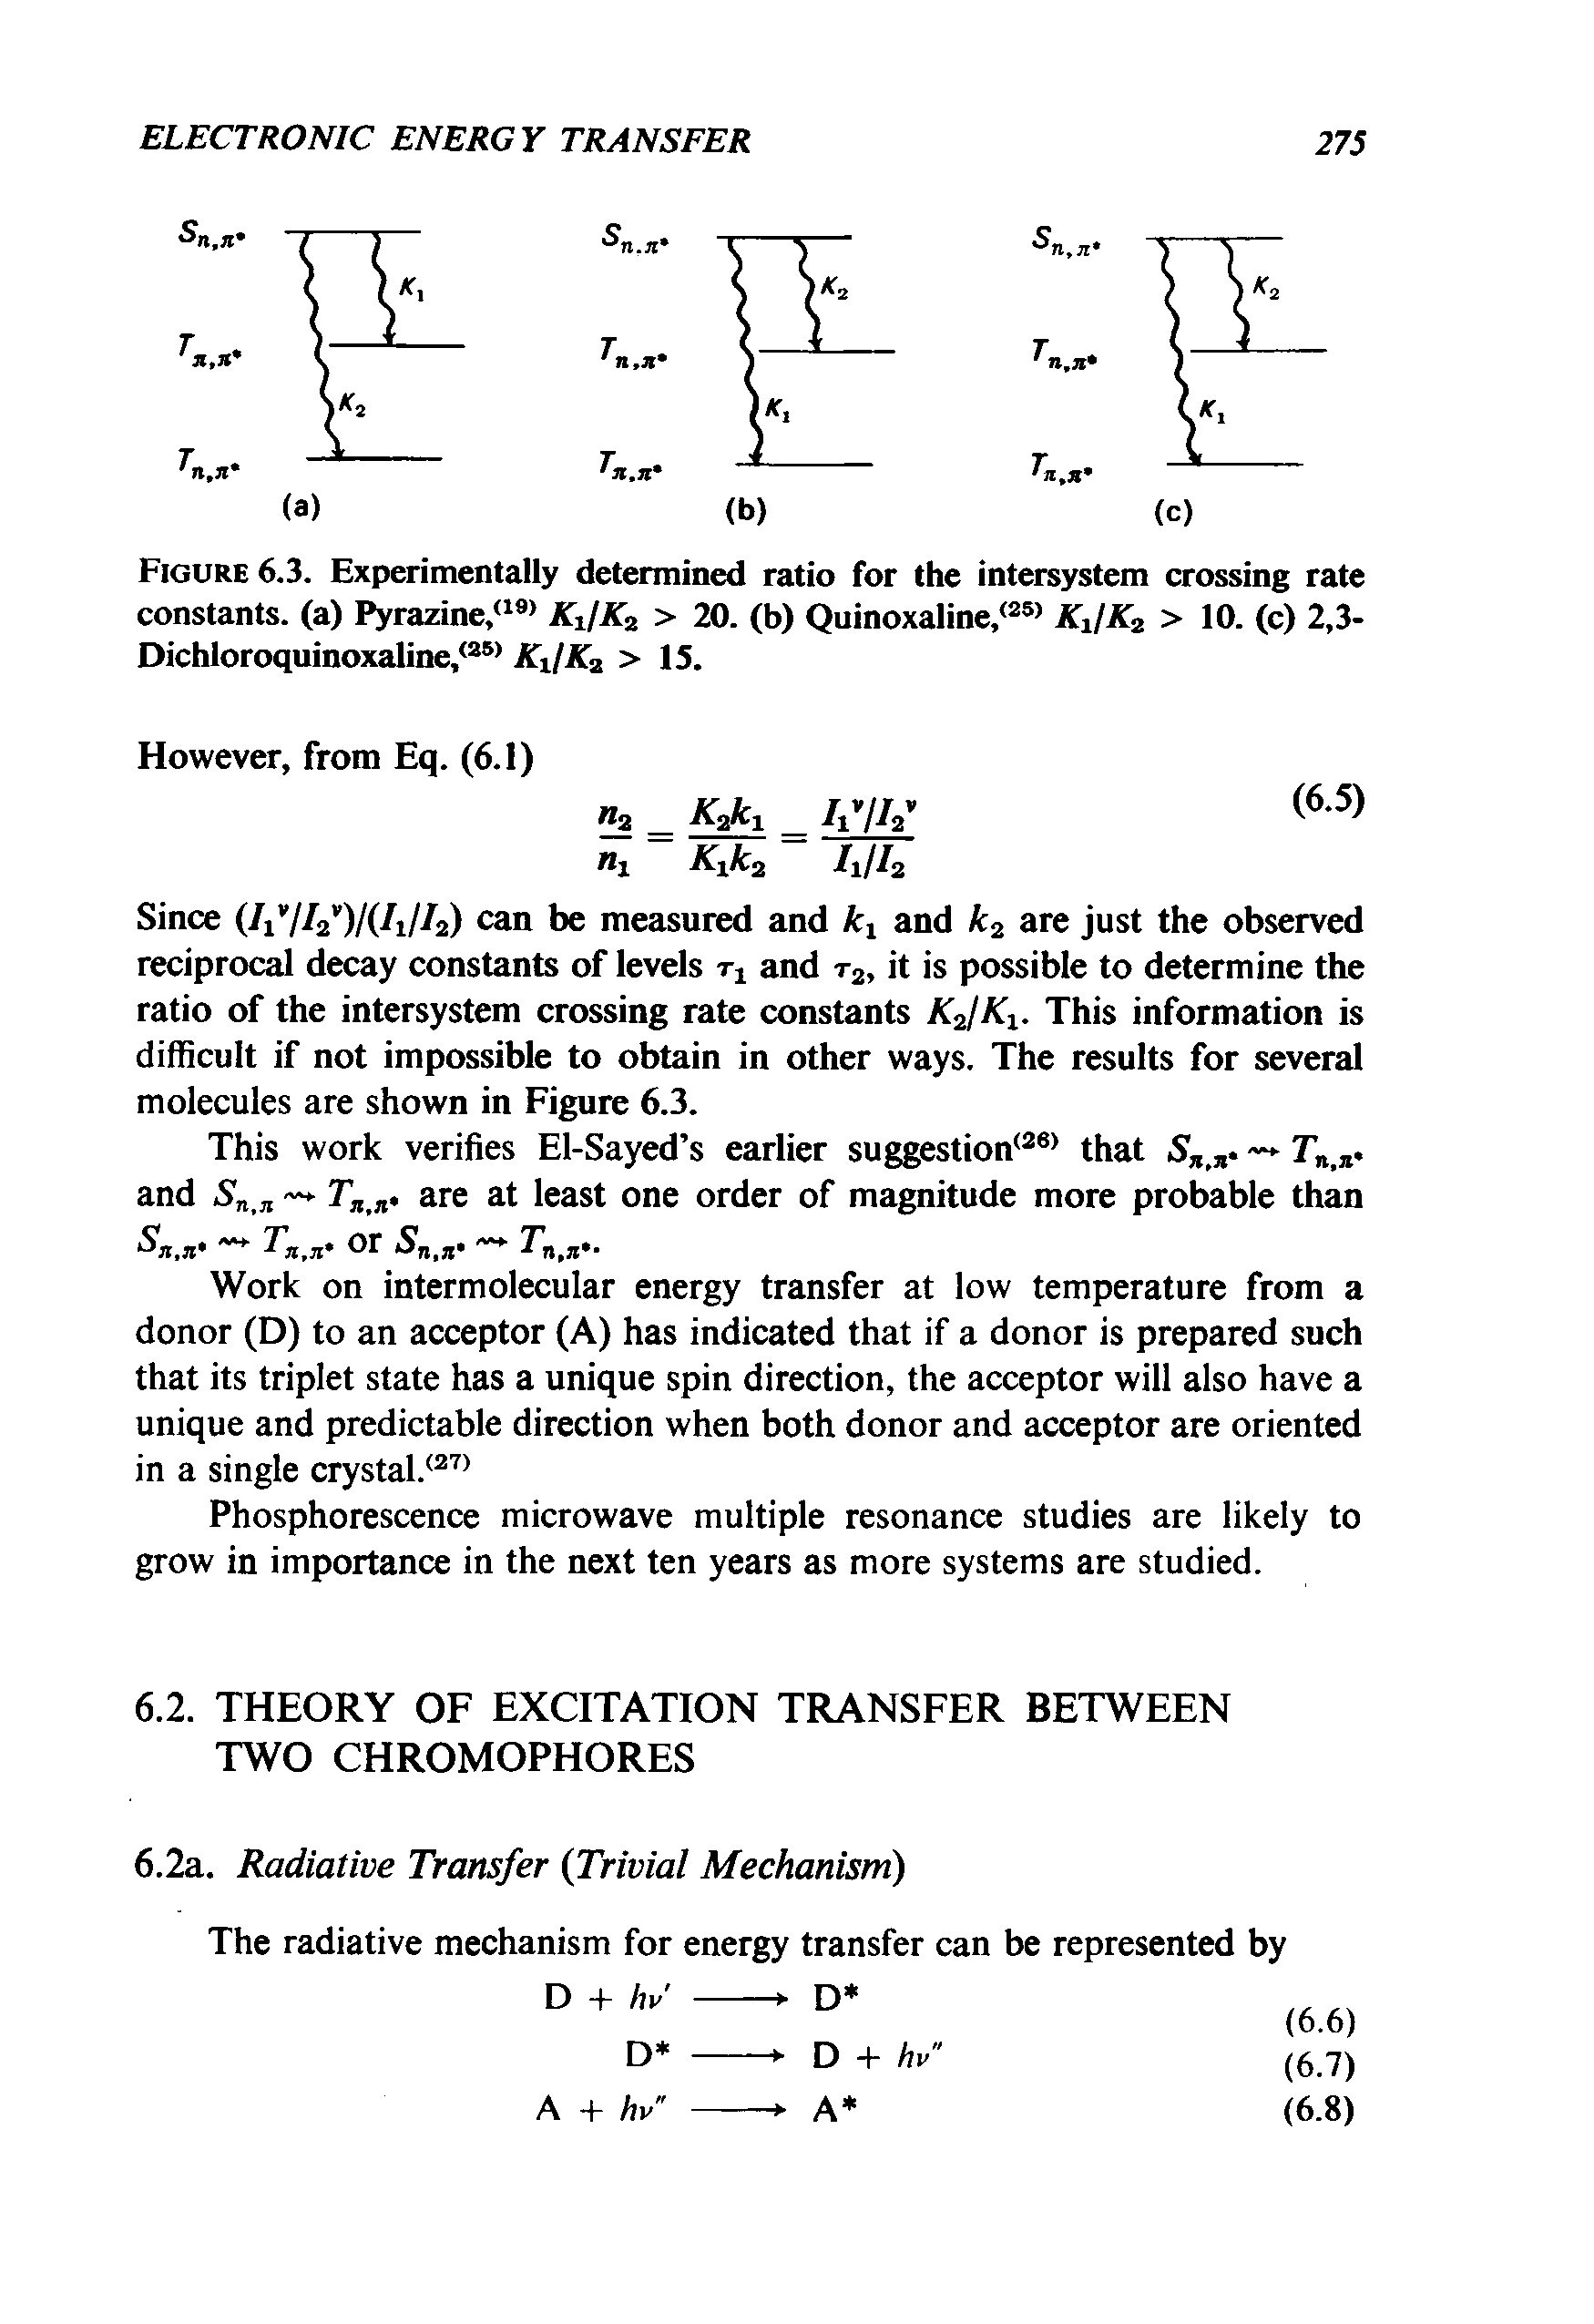 Figure 6.3. Experimentally determined ratio for the intersystem crossing rate constants, (a) Pyrazine,(19) KJKz > 20. (b) Quinoxaline, 25 KJK2 > 10. (c) 2,3-Dichloroquinoxaline,<25) KX/K2 >15.